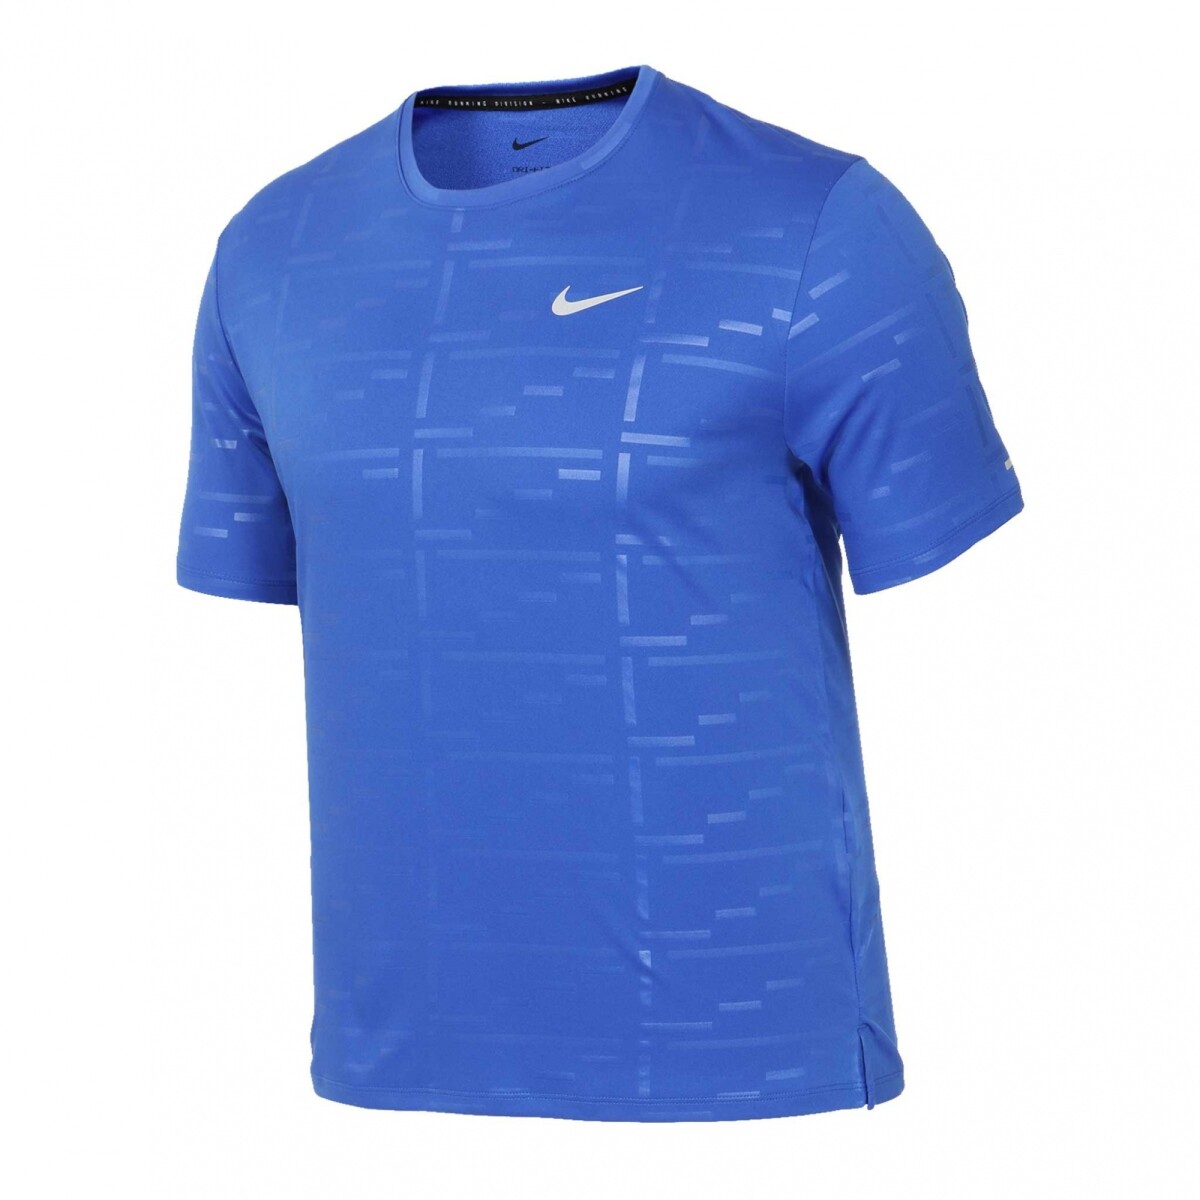 Remera Nike Running Hombre Miler - Color Único 